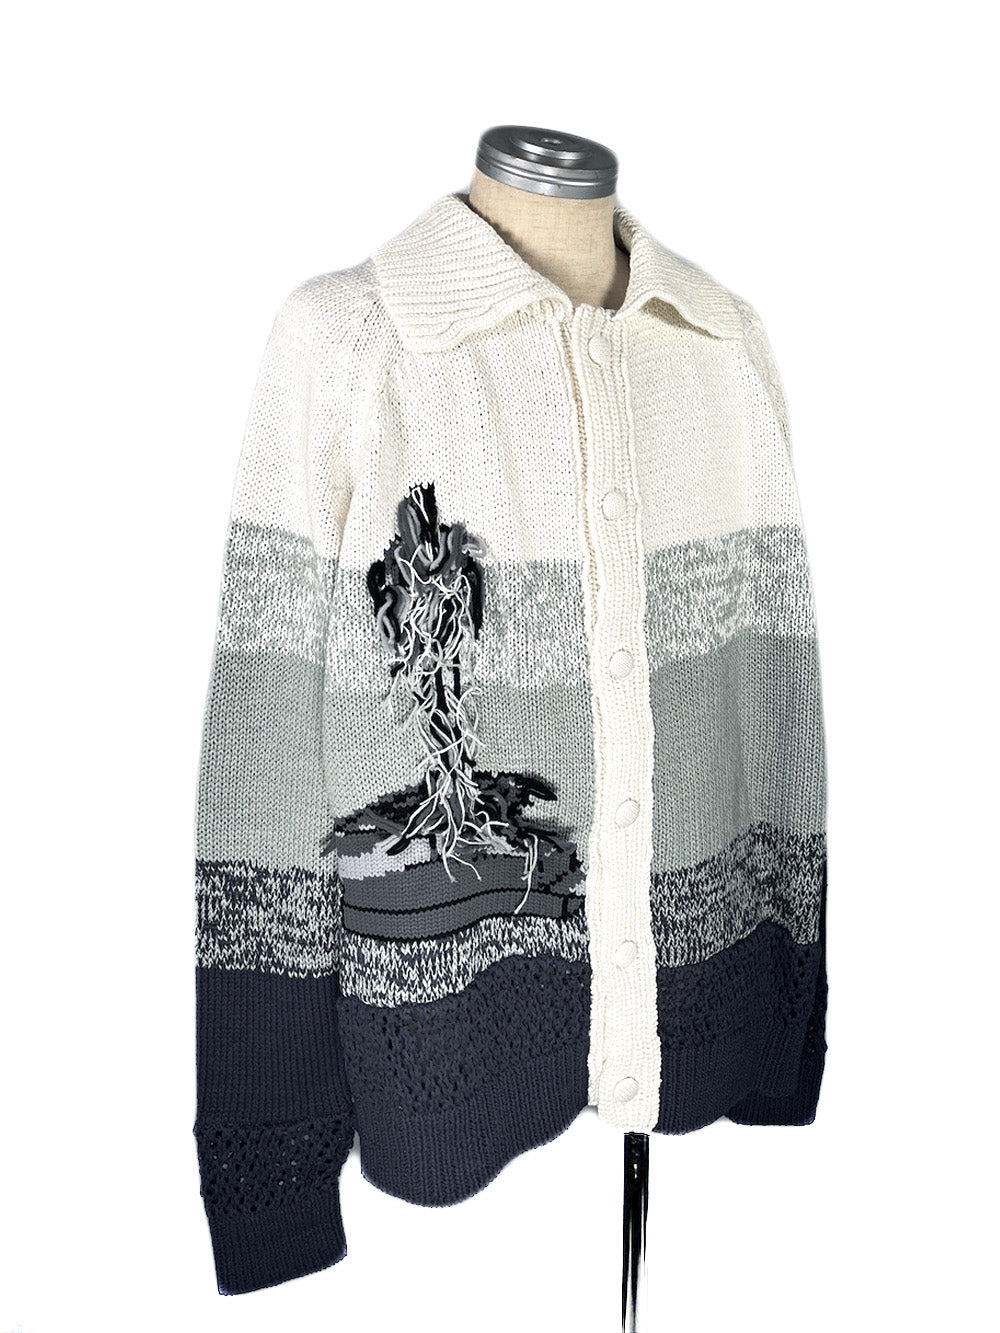 LB24SS-KNSH01 | Intarsia knit shirt cardigan | WHITE 